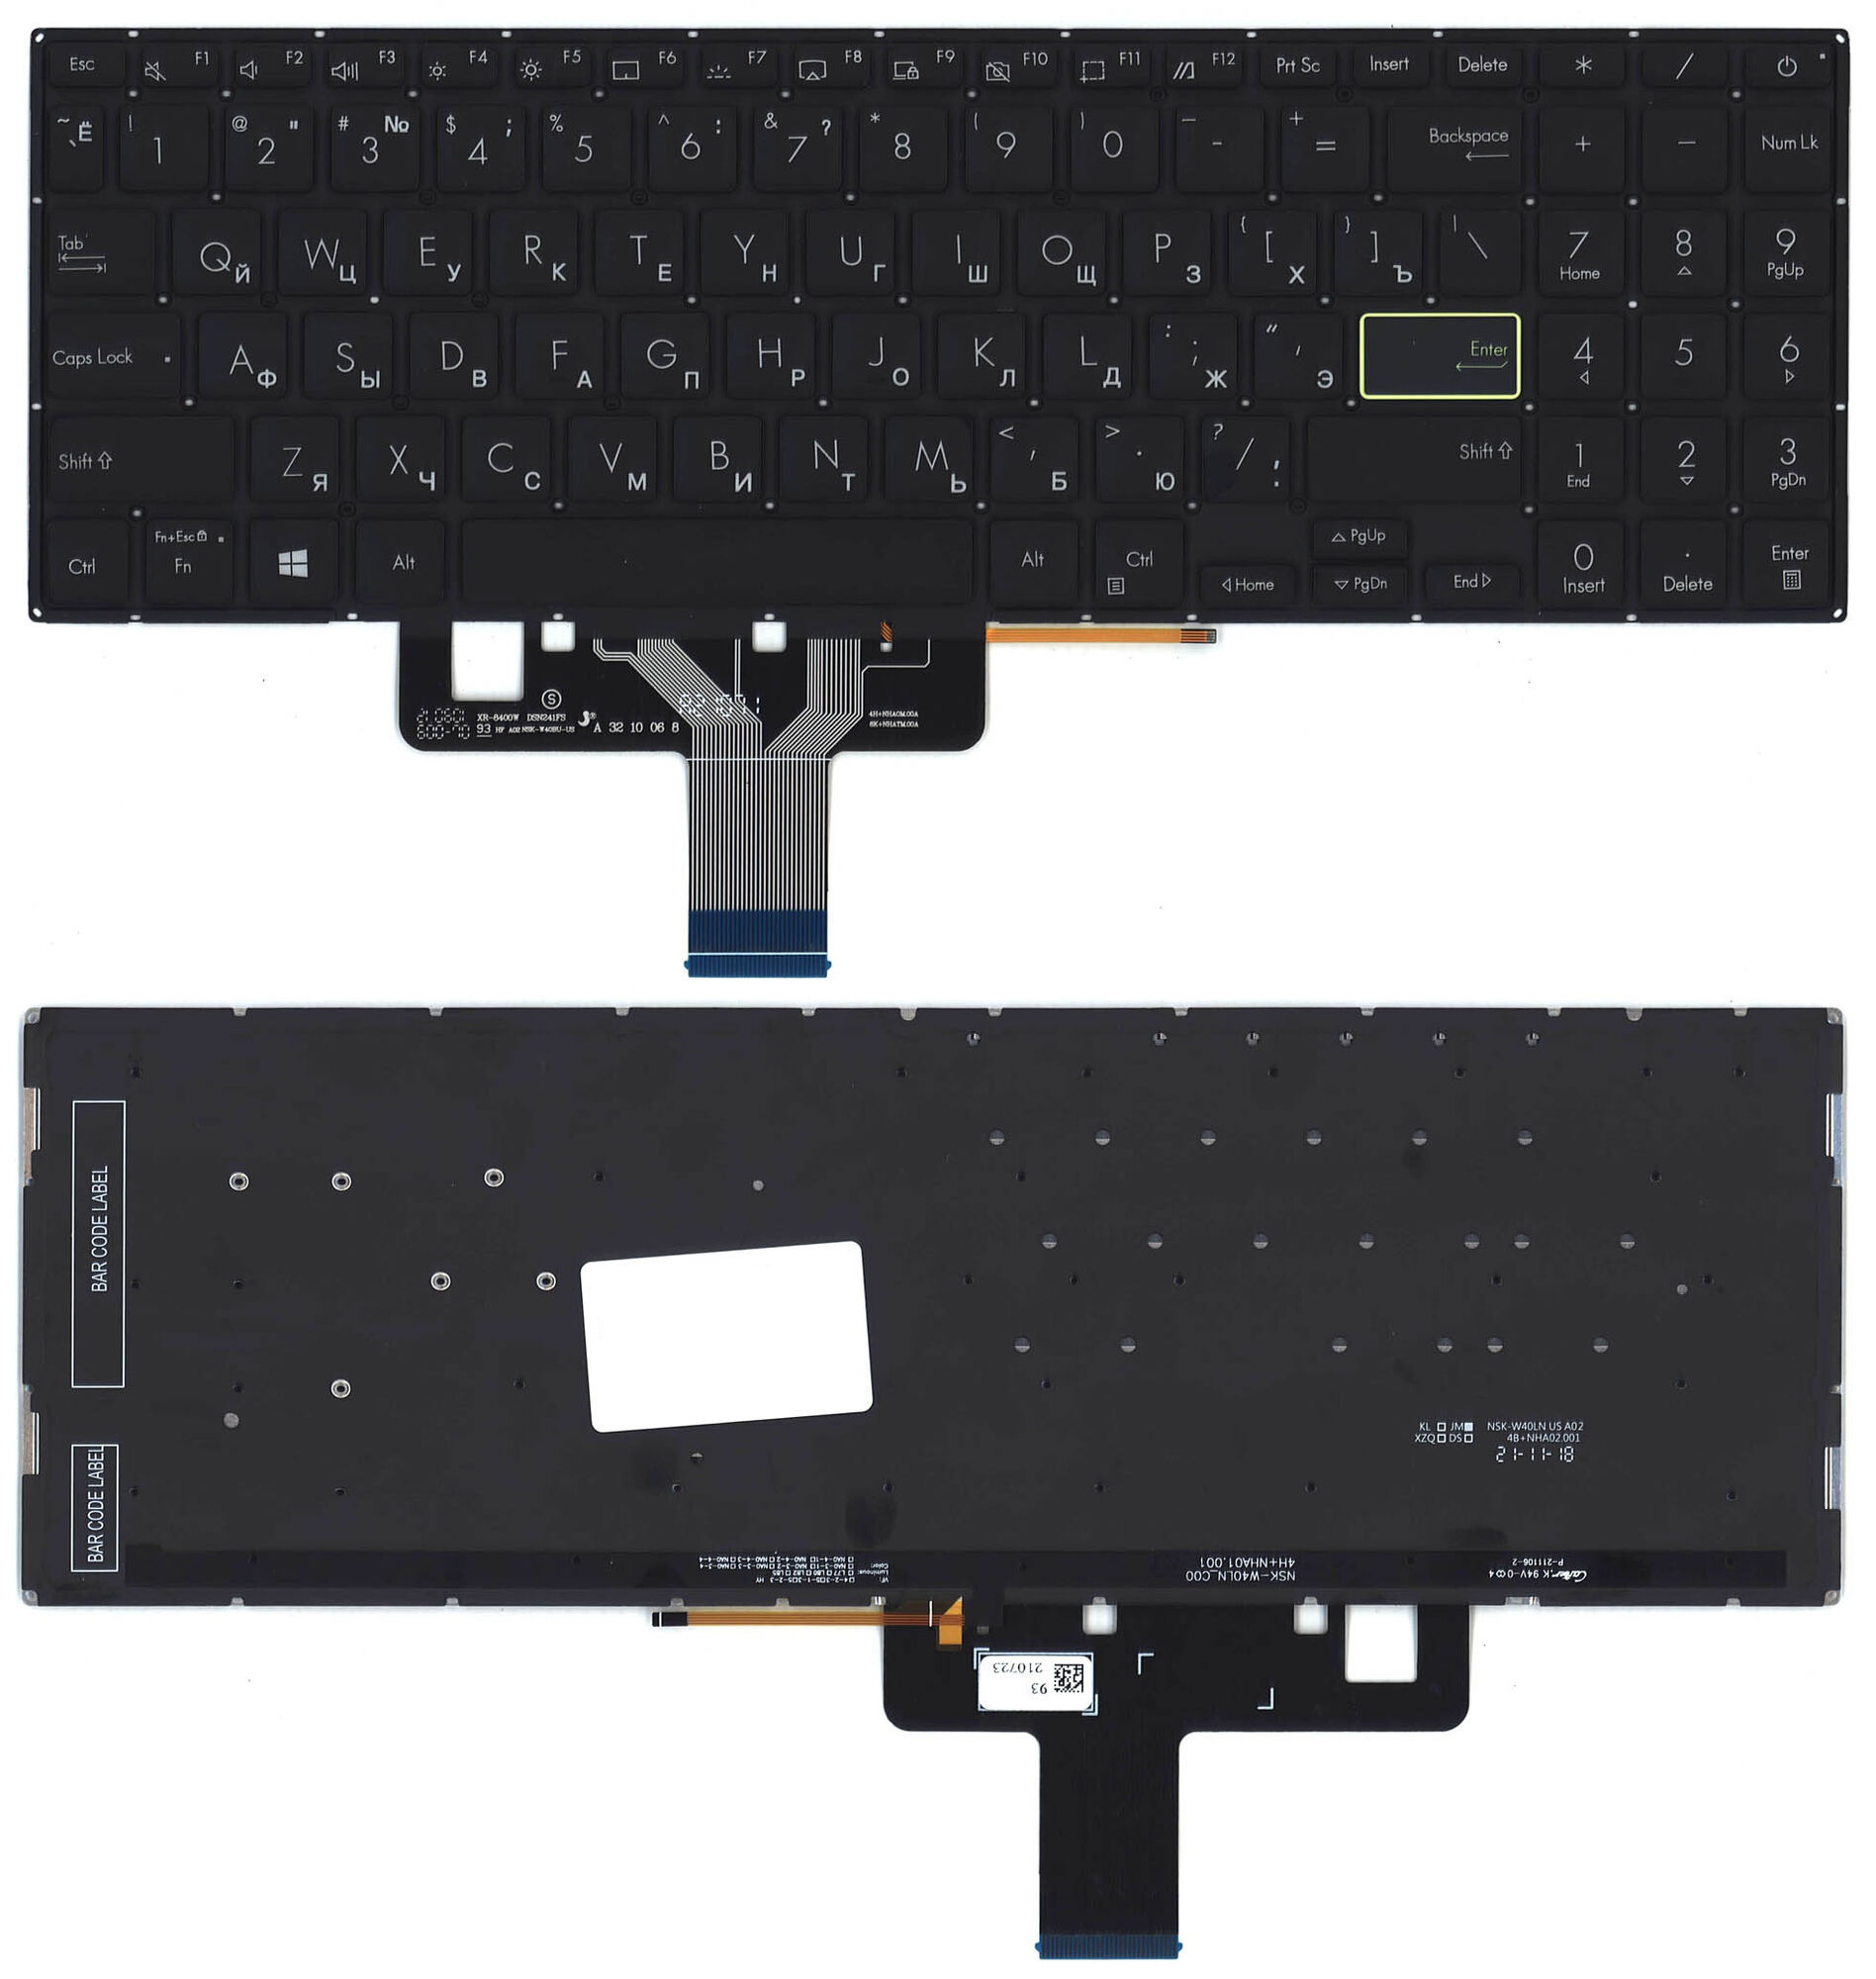 Клавиатура для Asus S533F черная с подсветкой p/n: NSK-W45SB 01, 9Z.NG060M801, 0KNB0-F124US00